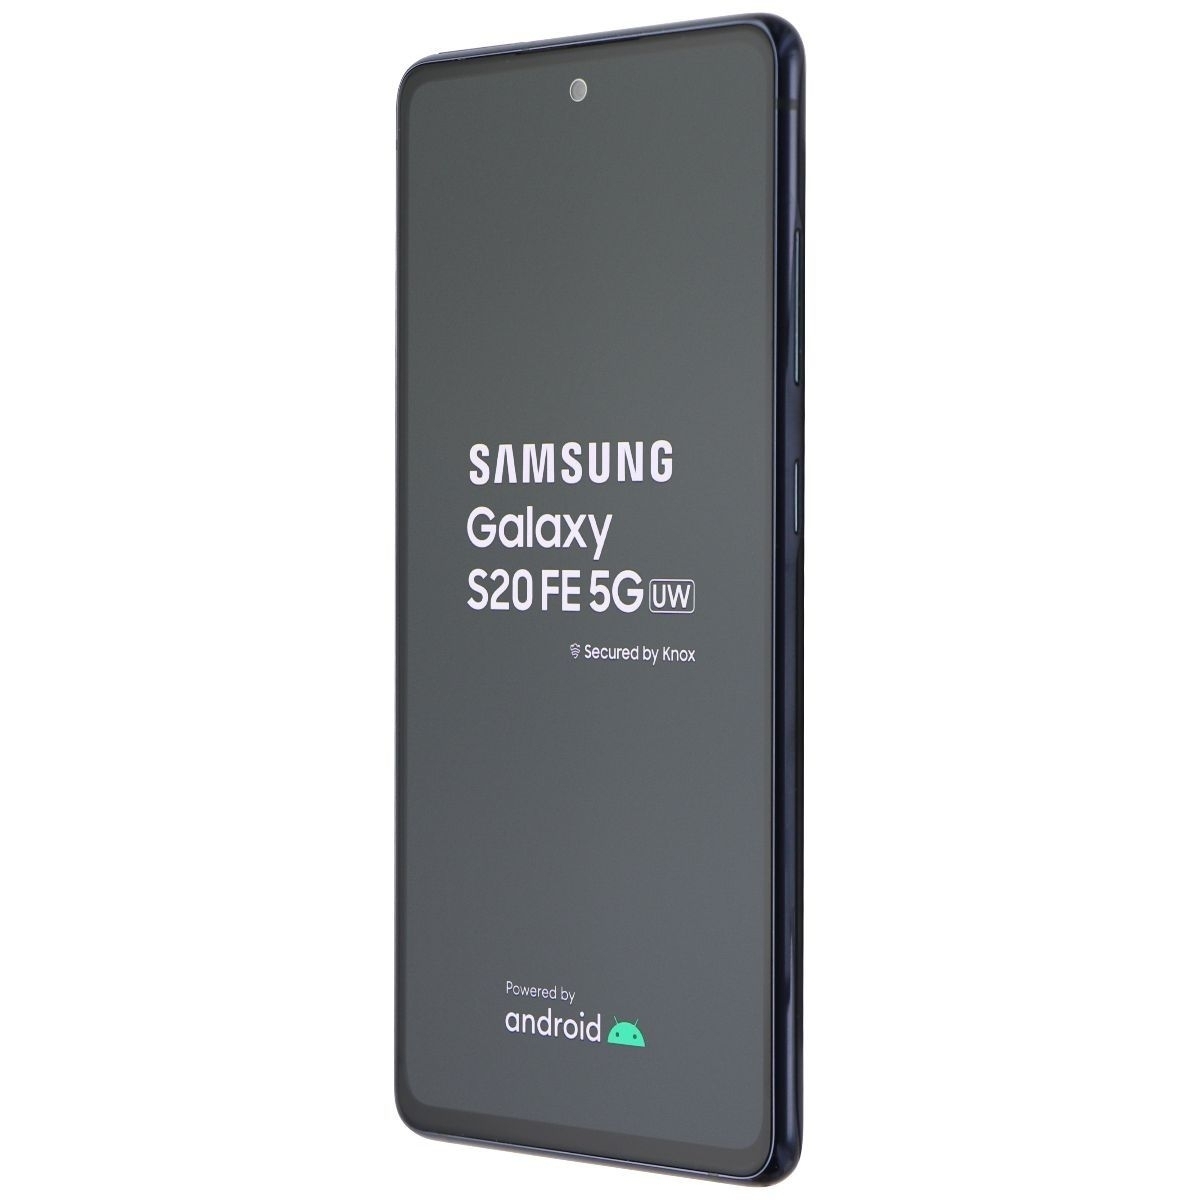 FAIR Samsung Galaxy S20 FE 5G UW (6.5-in) (SM-G781V) Verizon Only - 128GB/Navy